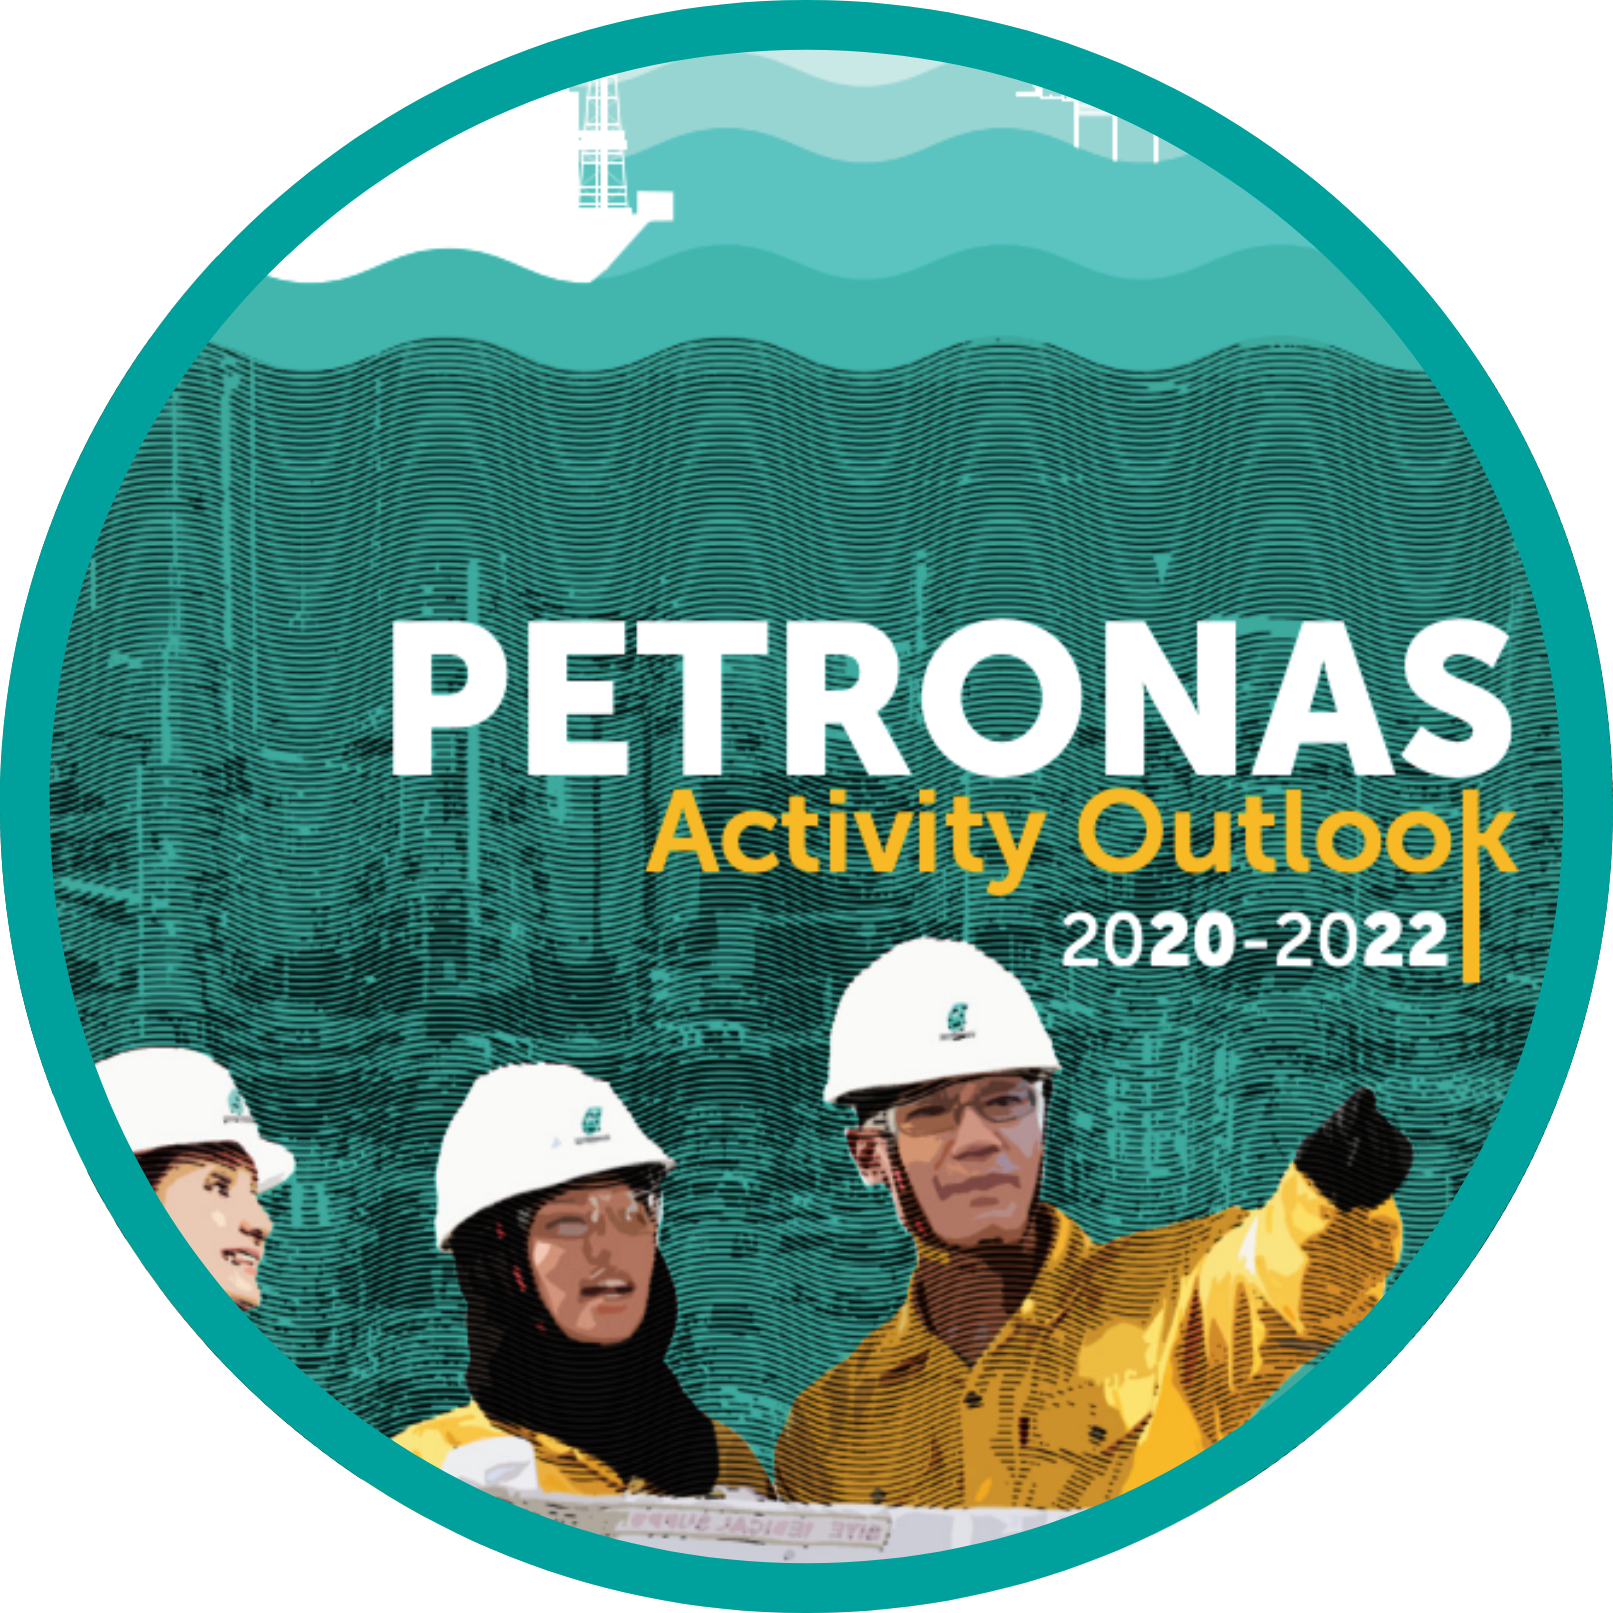 "PETRONAS Activity Outlook 2020-2022"